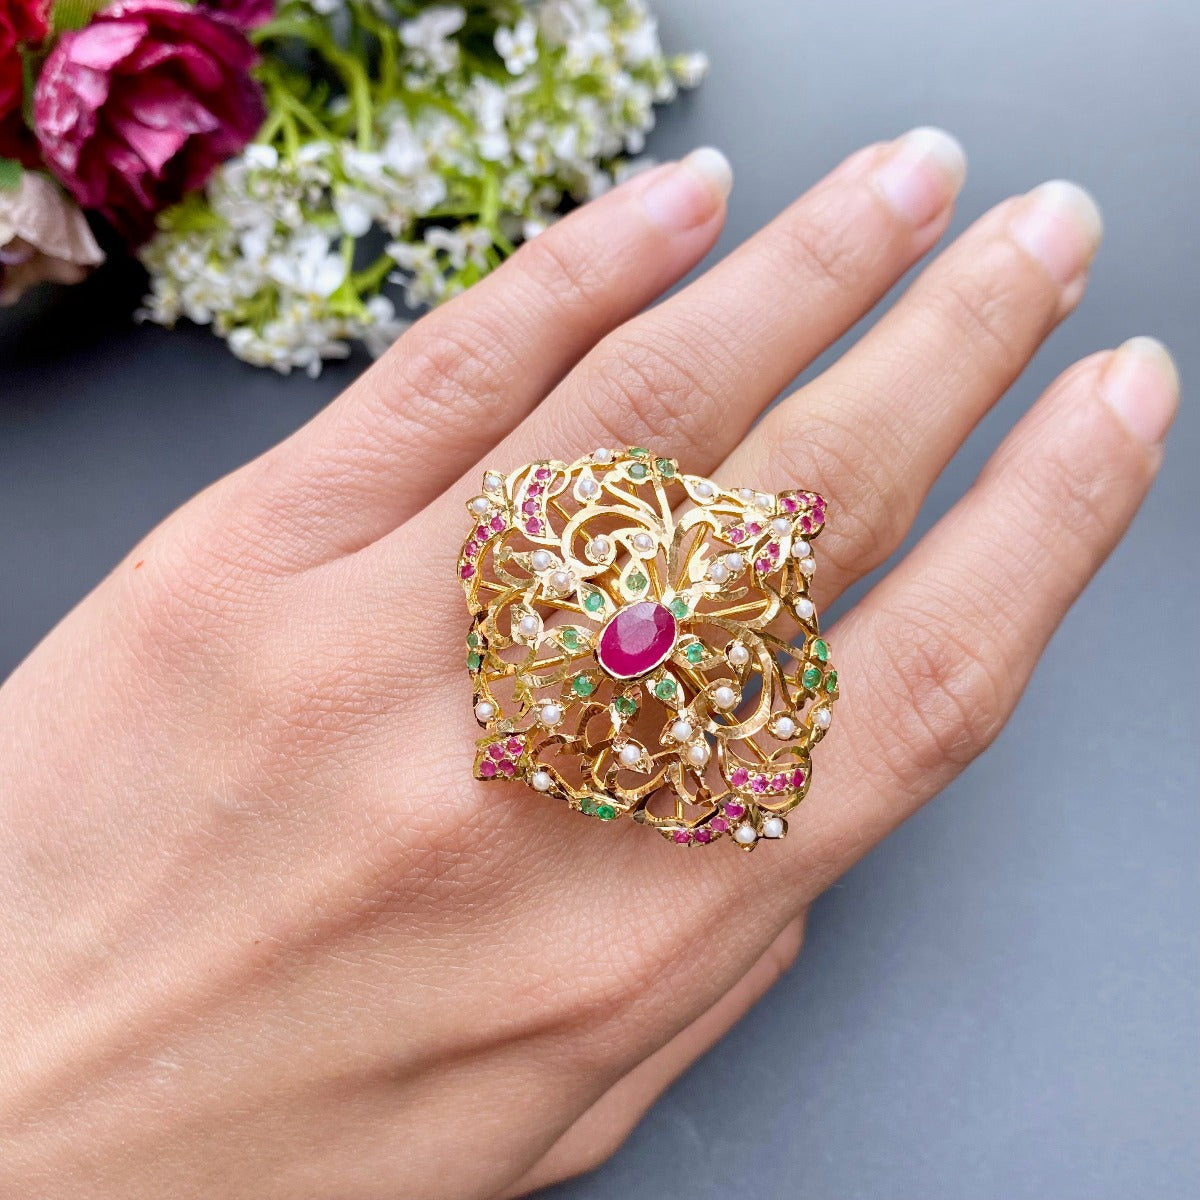 22 Carat Gold Ladies Ring | Edwardian Victorian Era Inspired Design | Antique Looks 